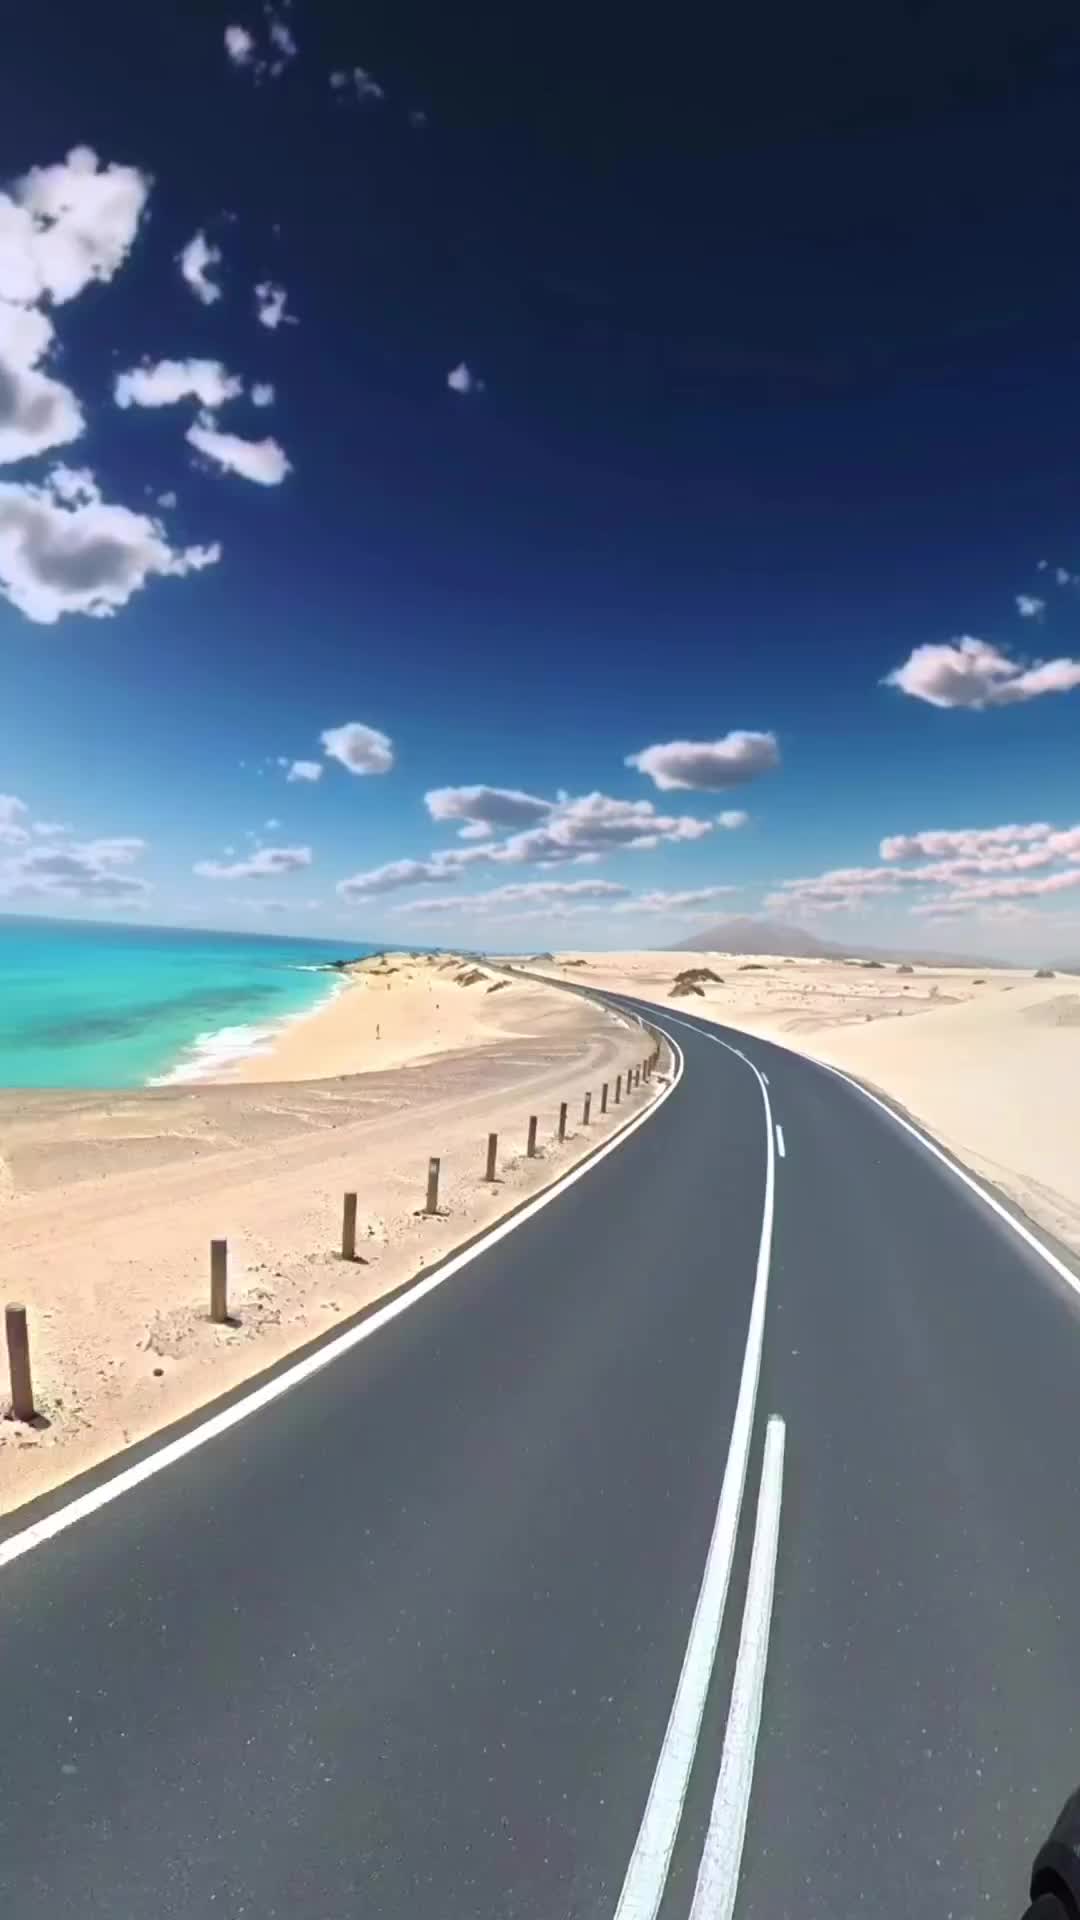 Beach Vibes: Music, Sun, and Sand in Fuerteventura